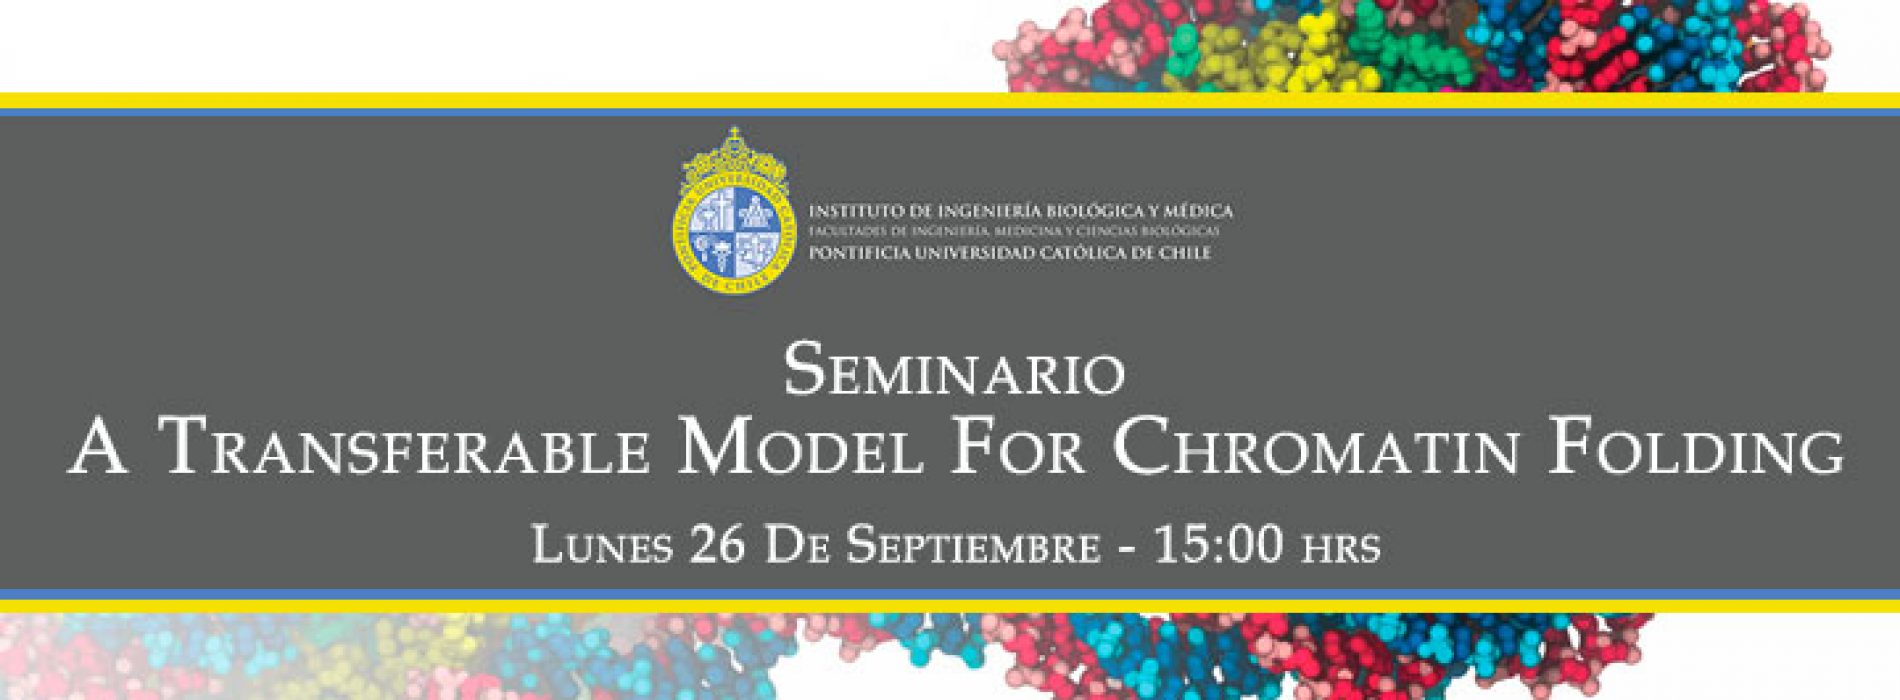 Seminario IIBM-UC José N. Onuchic: “A Transferable Model for Chromatin Folding”